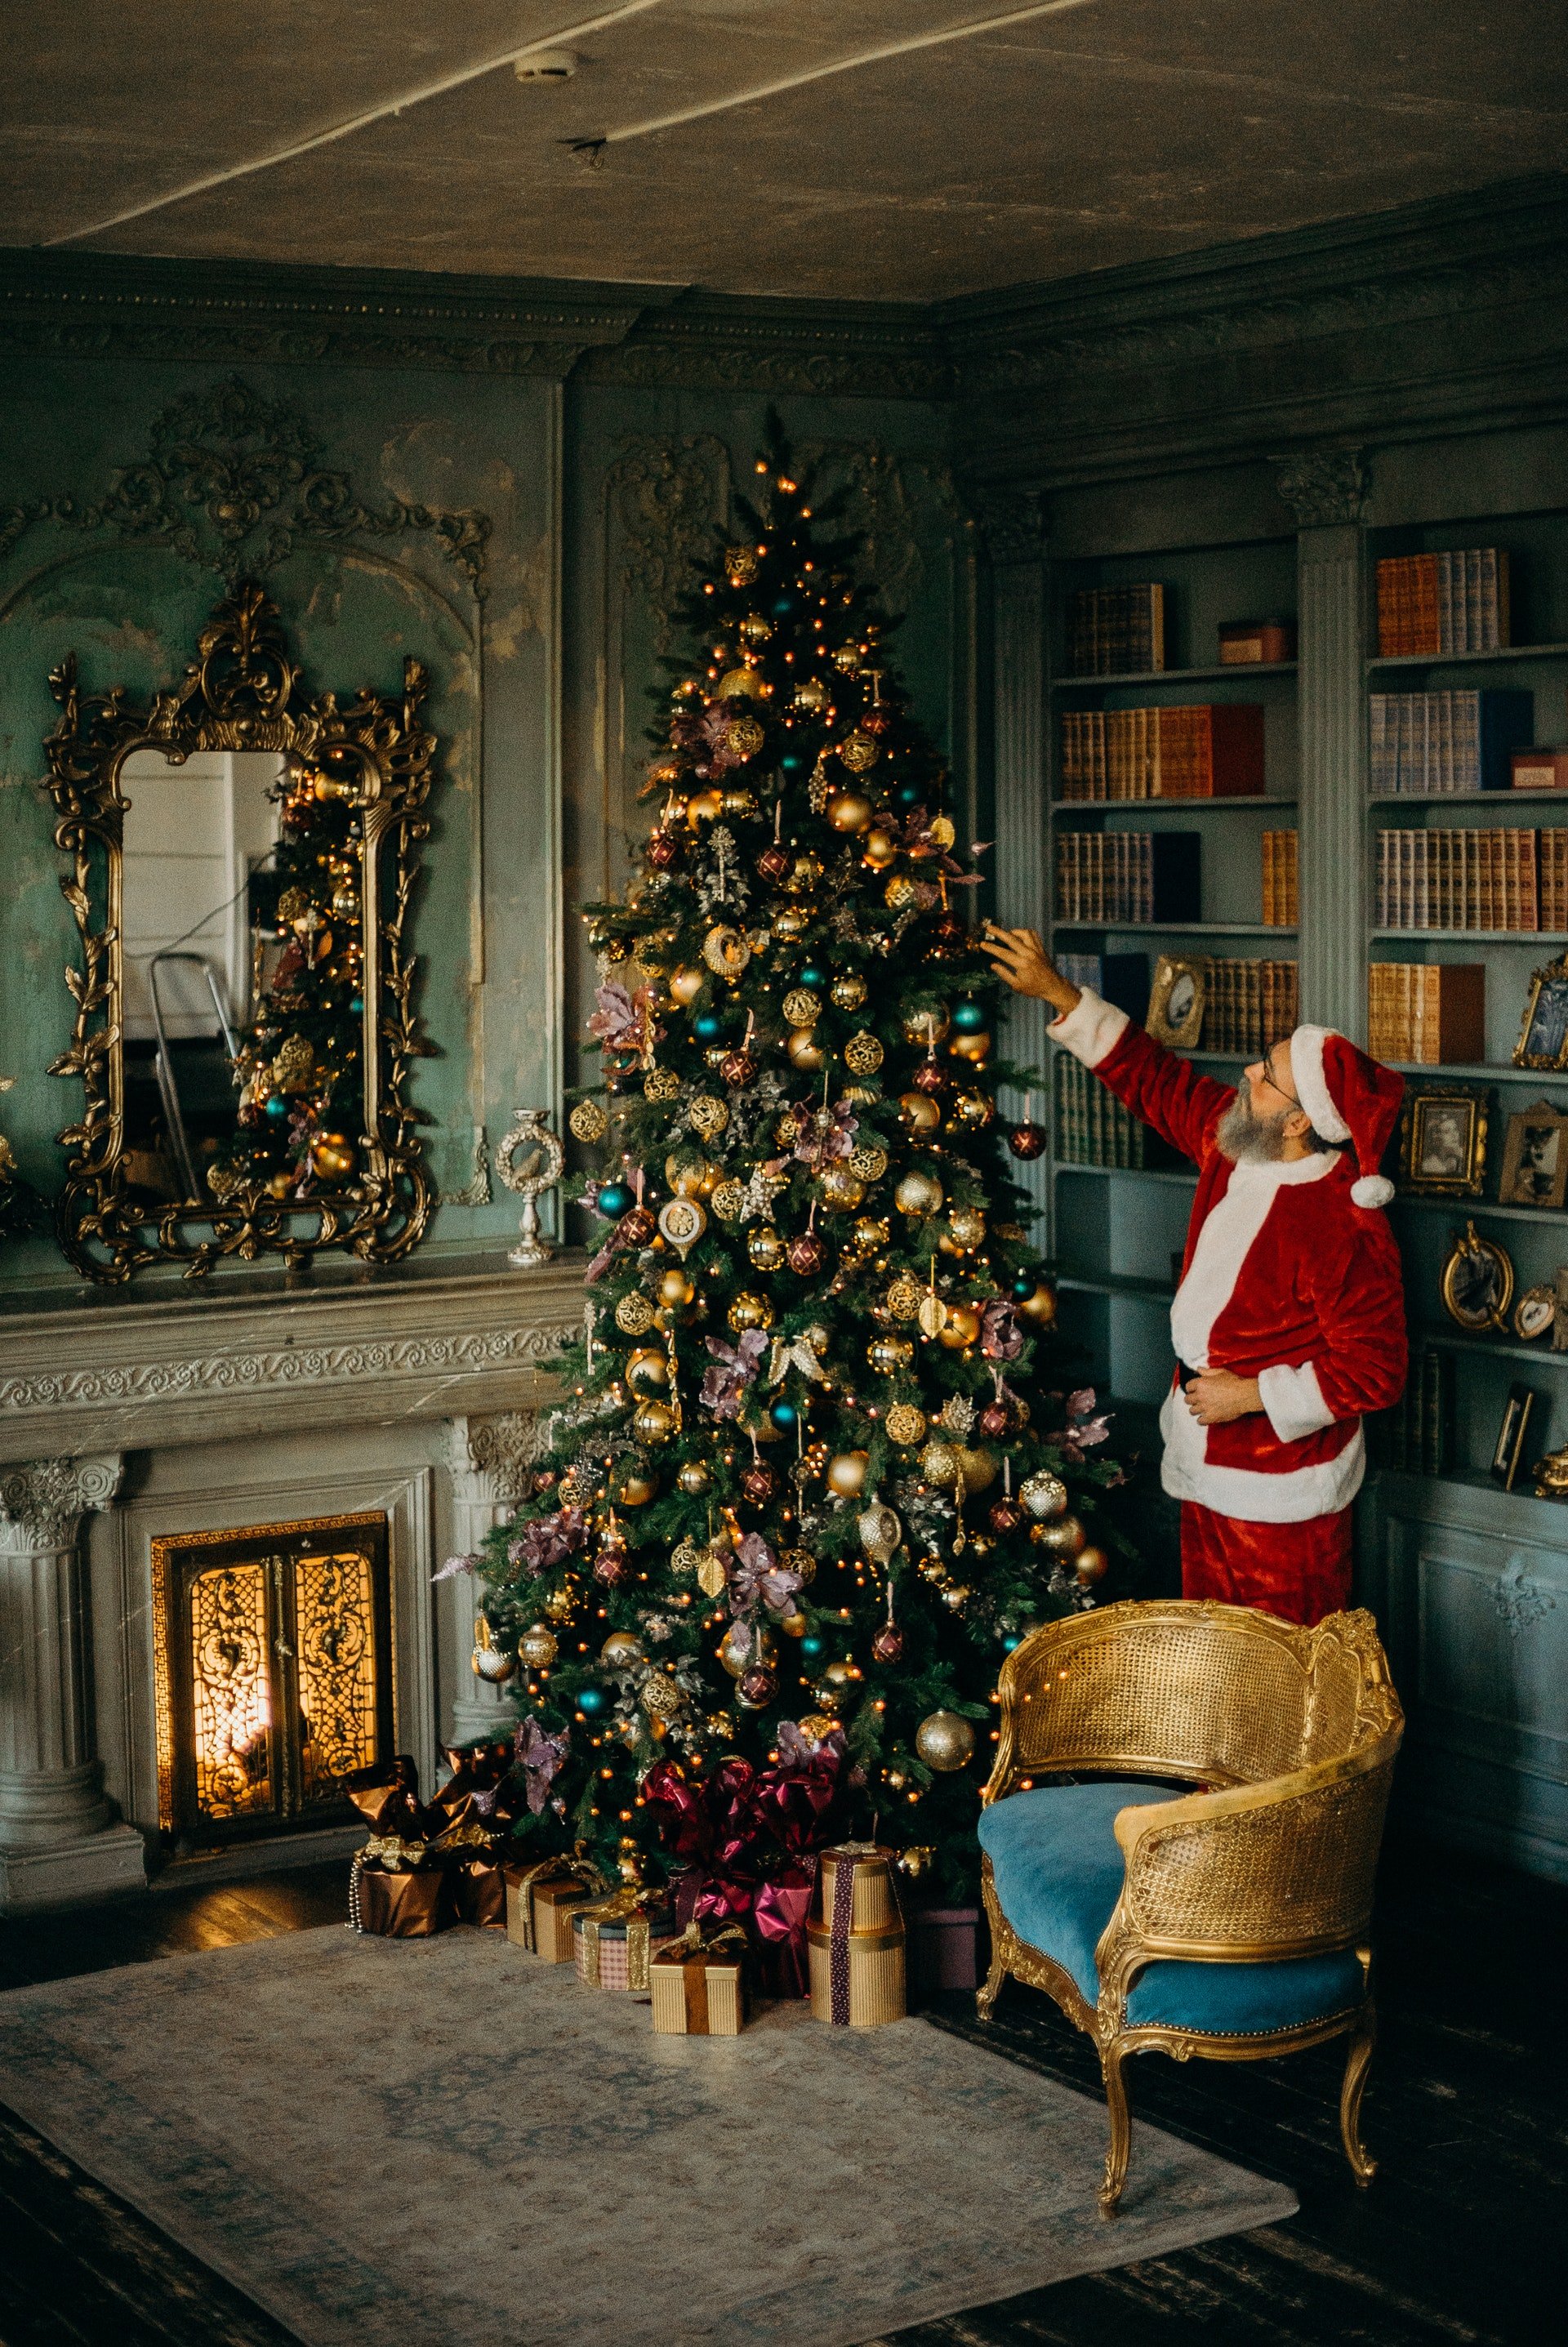 Photo of Santa Claus decorating a christmas tree | Photo: Pexels